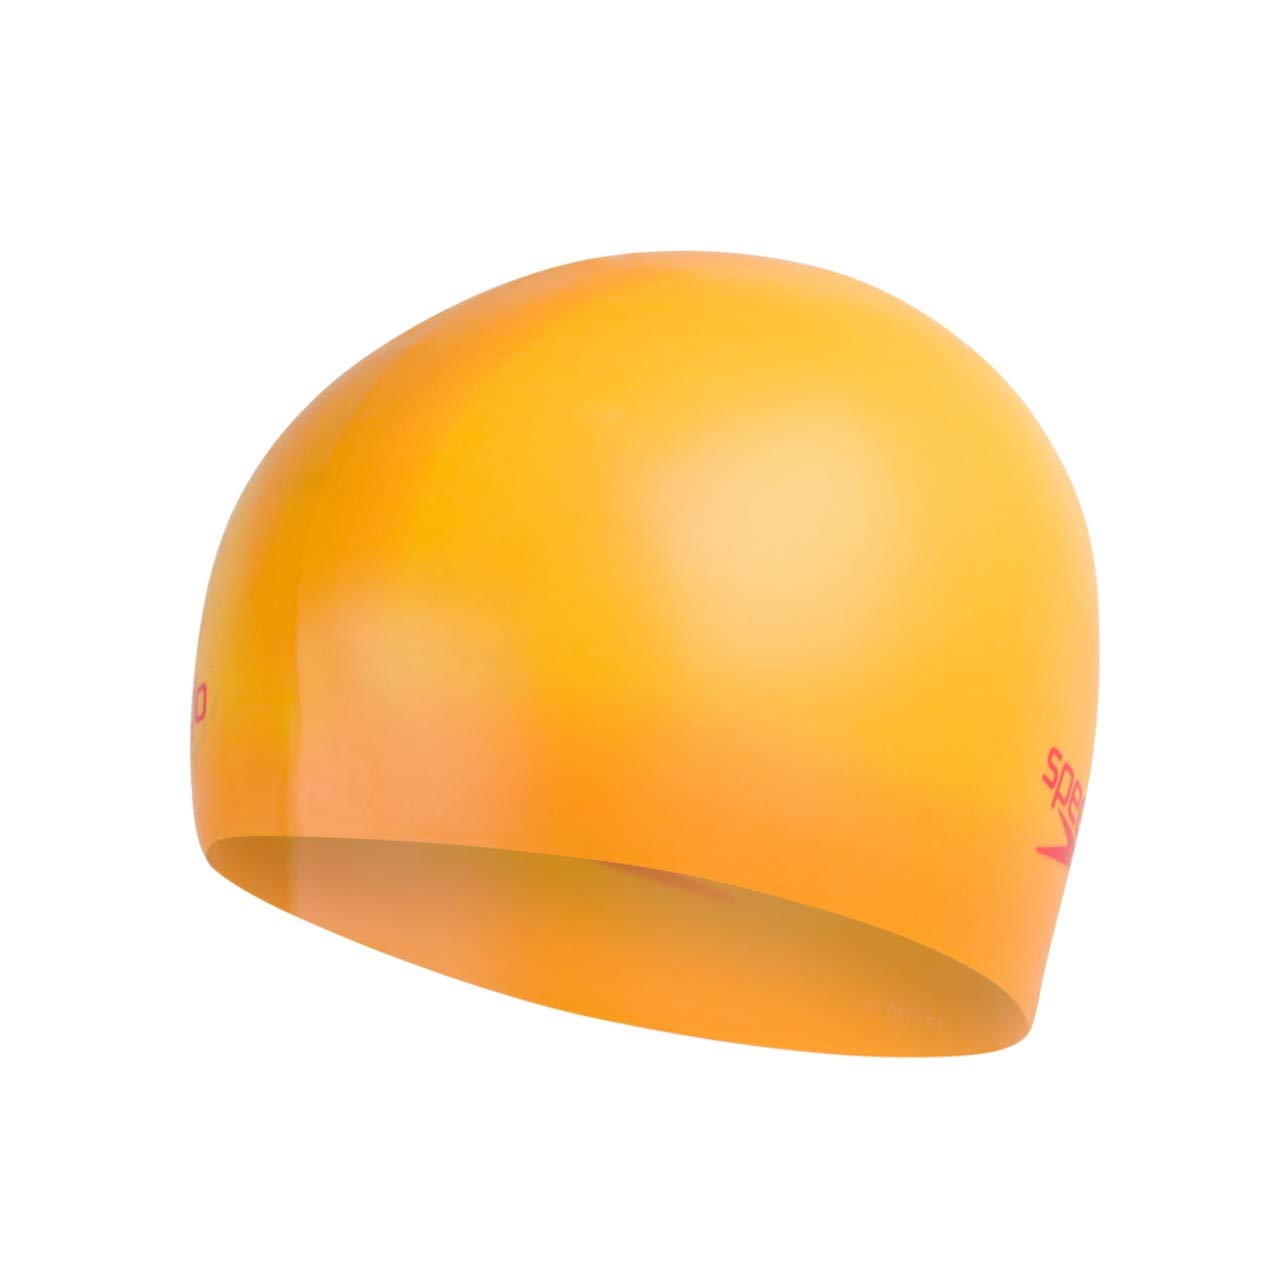 Speedo Molded Silicone Cap For Unisex-Junior (Size: 1Sz,Color: Orange) - Best Price online Prokicksports.com